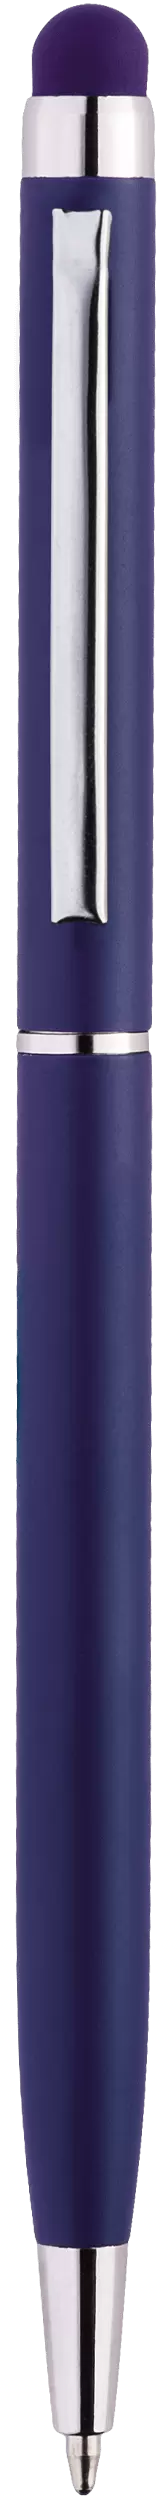 Ручка KENO Темно-синяя 1115-14